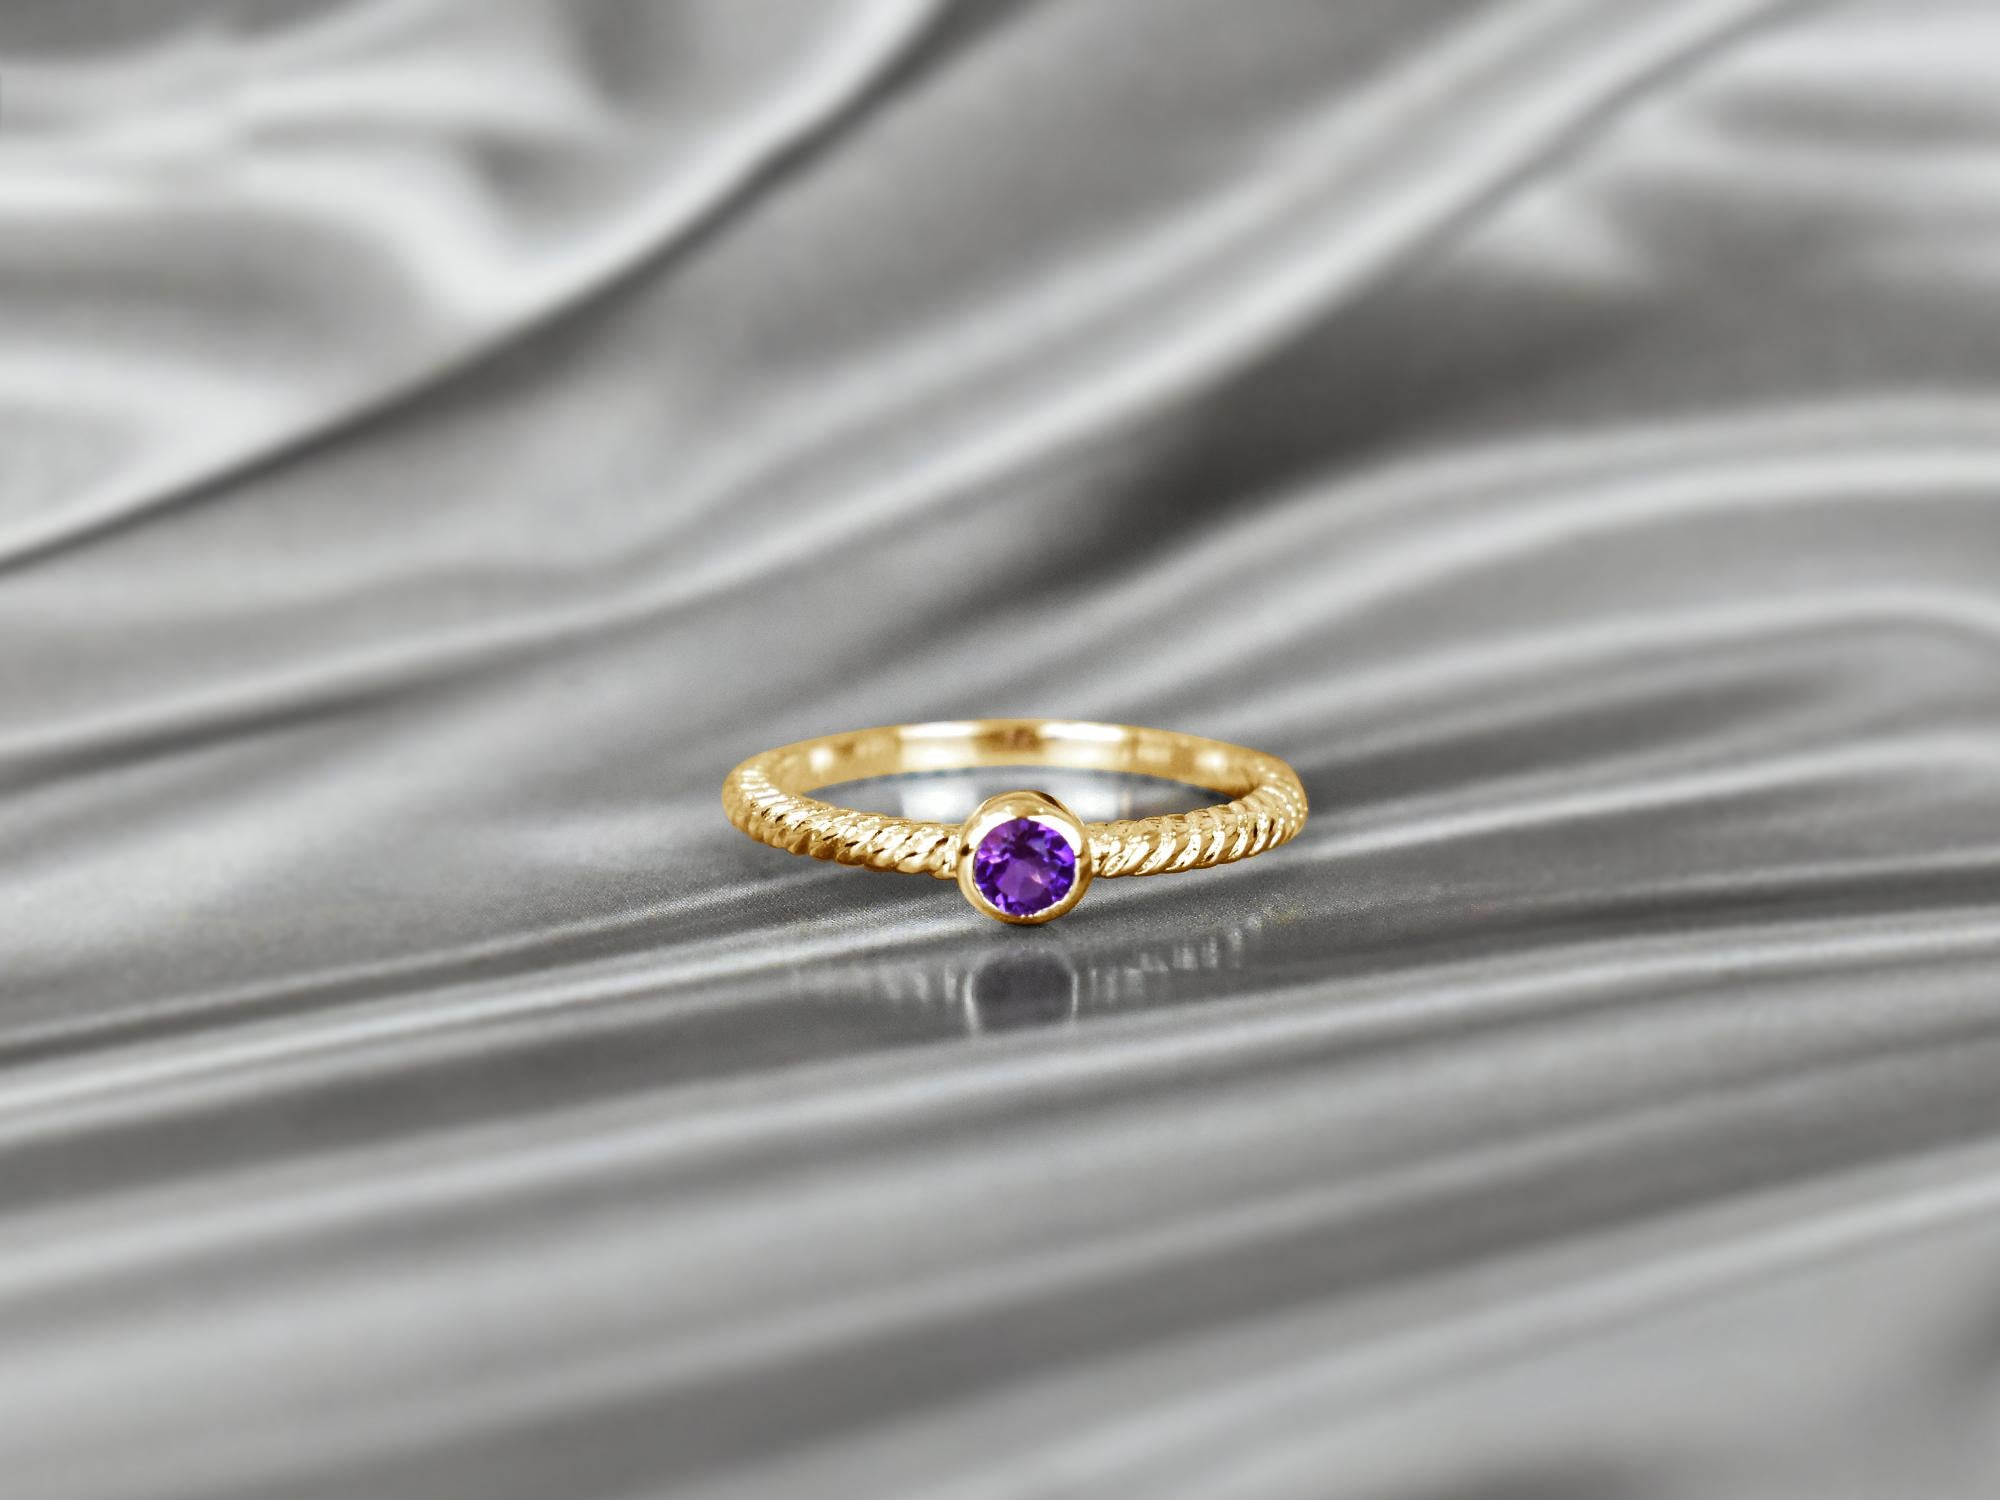 For Sale:  14k Gold Round Gemstone 3.5mm Round Gemstone Ring Birthstone Ring Stackable Ring 3